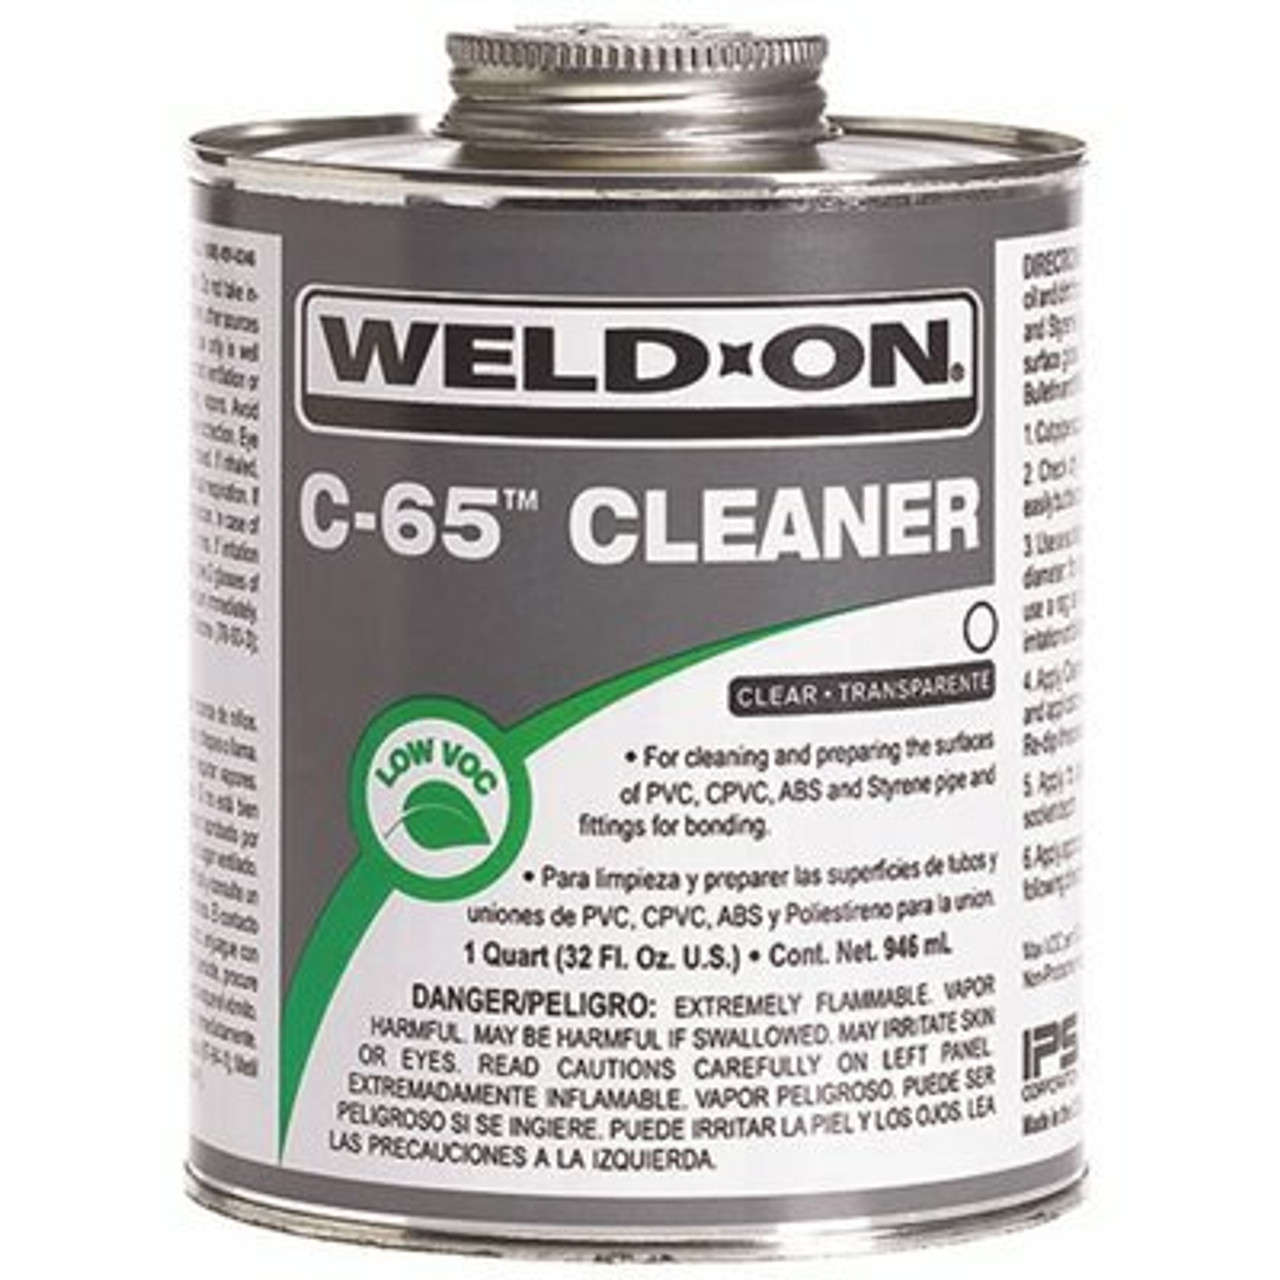 Weld-On C-65 Pvc/Cpvc/Abs/Styrene Cleaner, Clear, Low Voc, 1/2 Pint (8 Fl. Oz.)